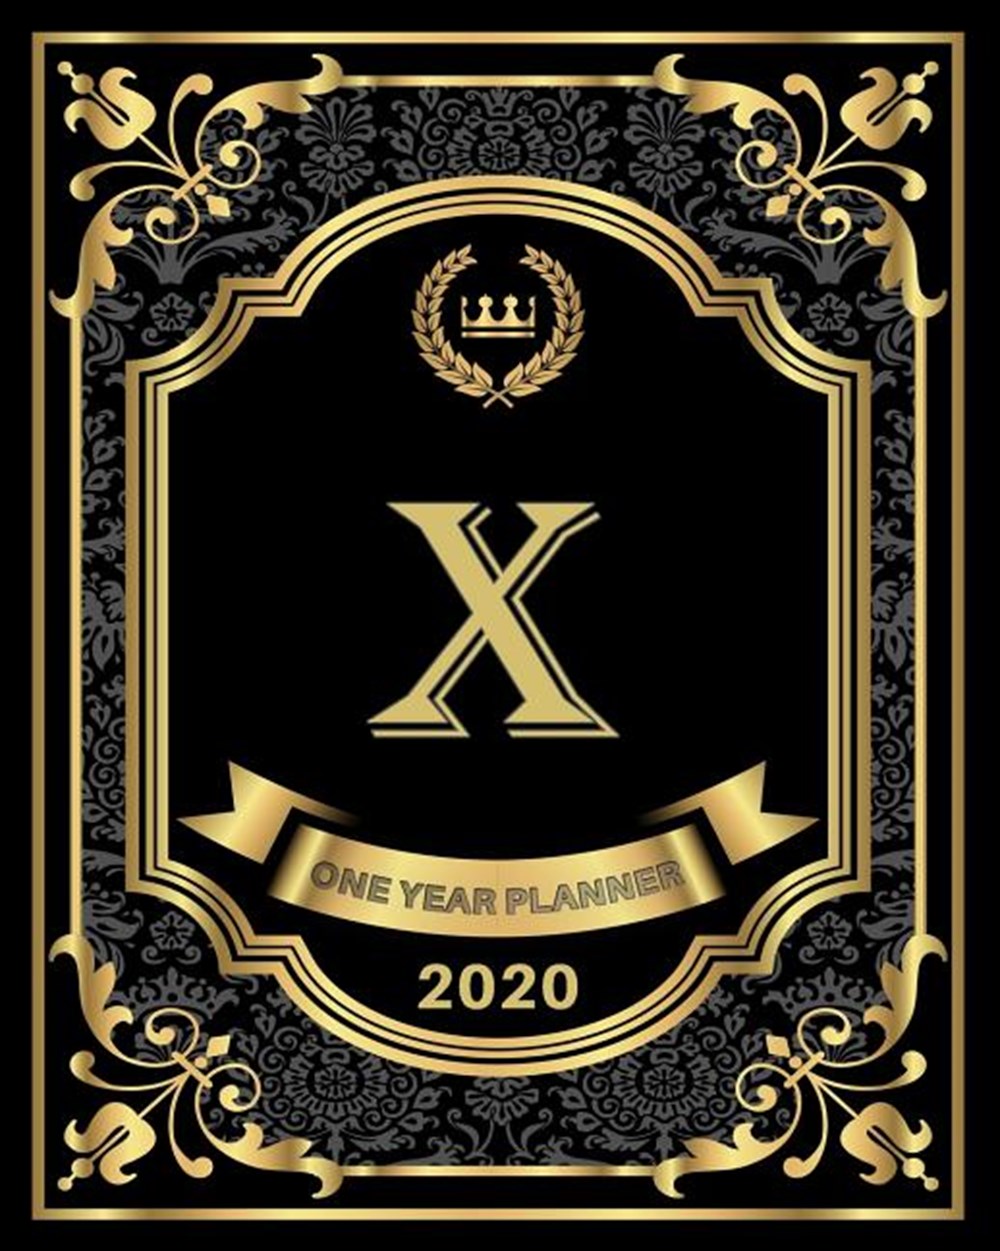 X - 2020 One Year Planner Elegant Black and Gold Monogram Initials - Pretty Calendar Organizer - One